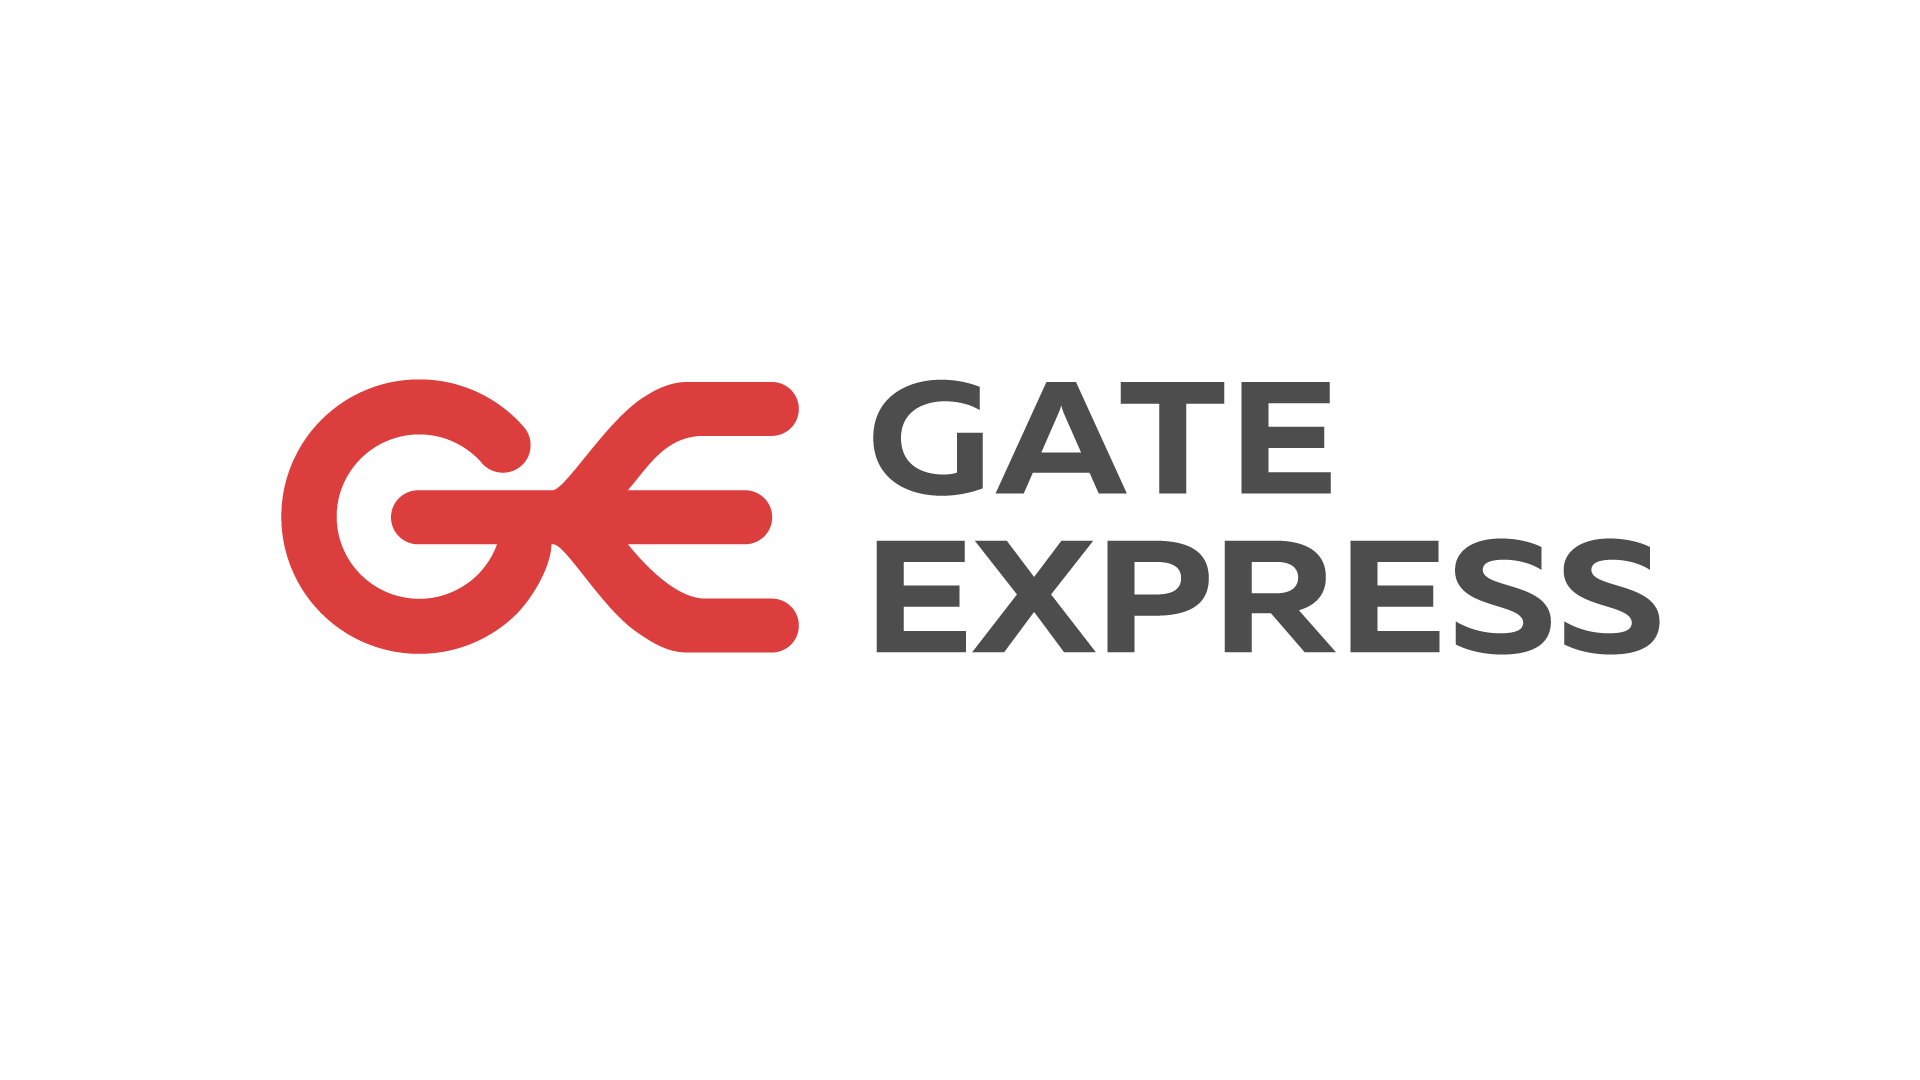 Gate express